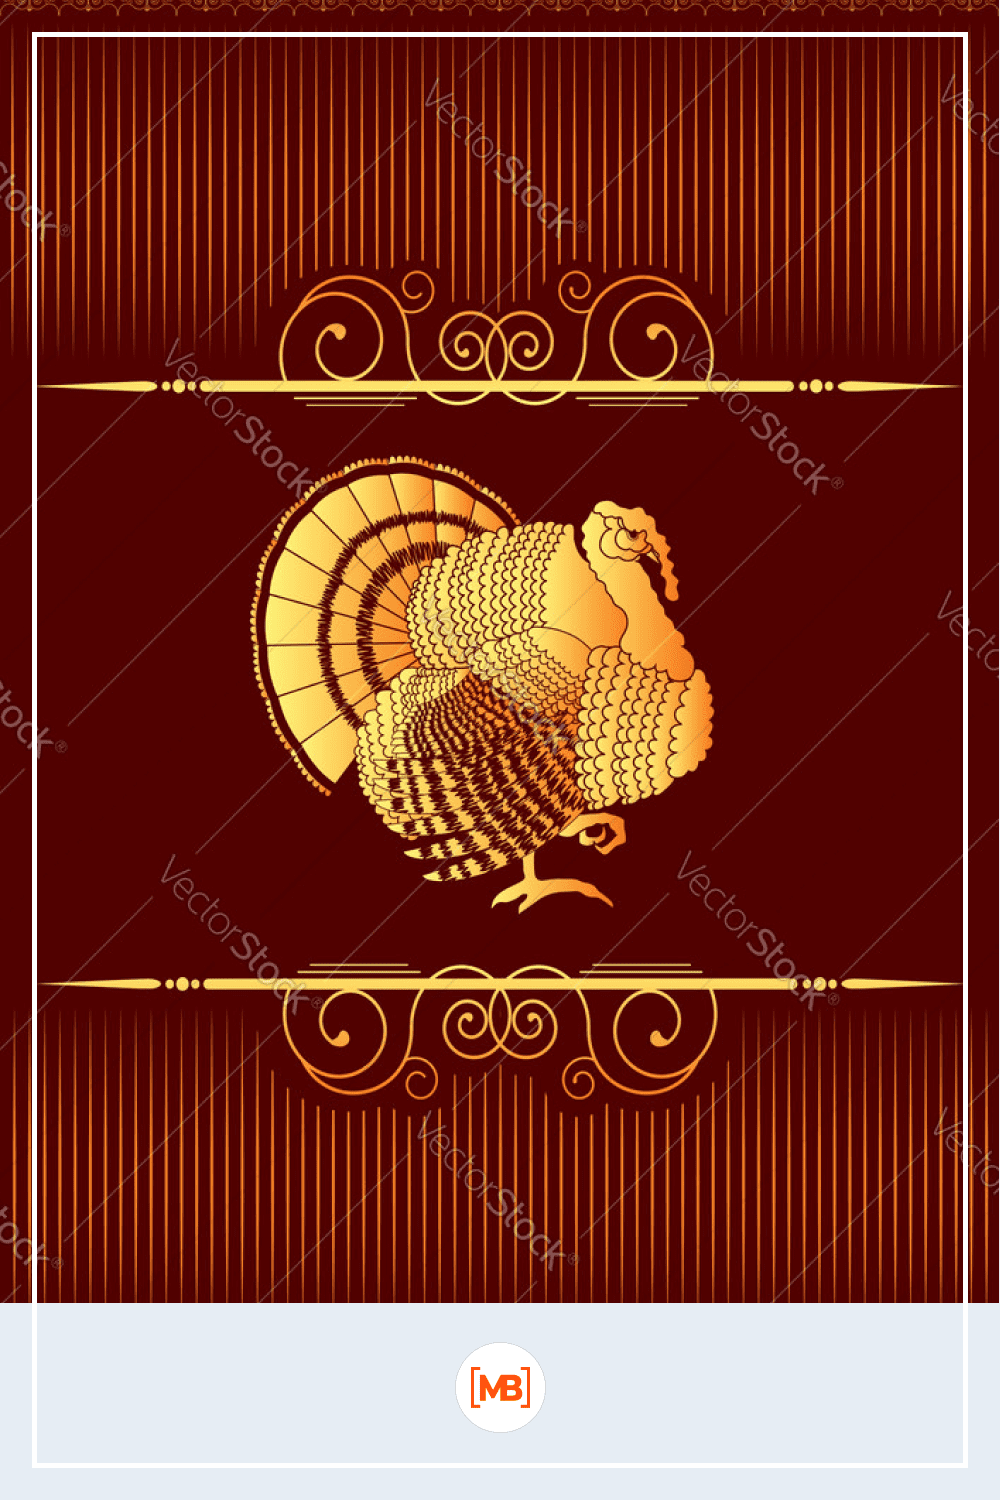 Thanksgiving turkey background vector image.